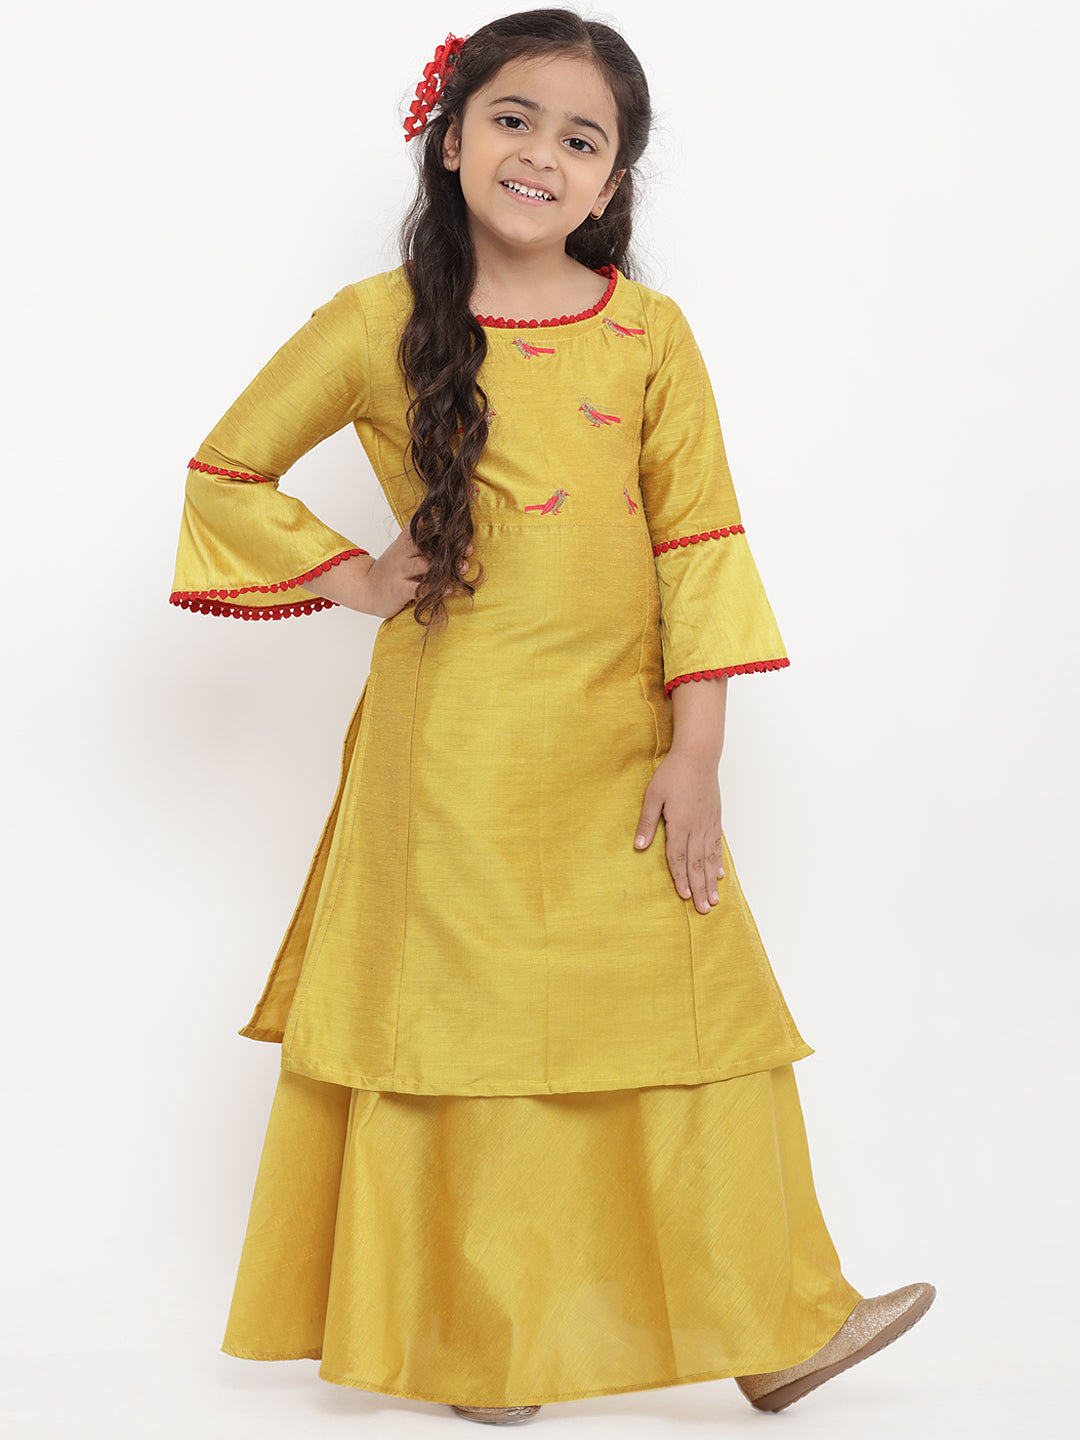 Bitiya by Bhama Girls Yellow Embroidered Kurti with Skirt